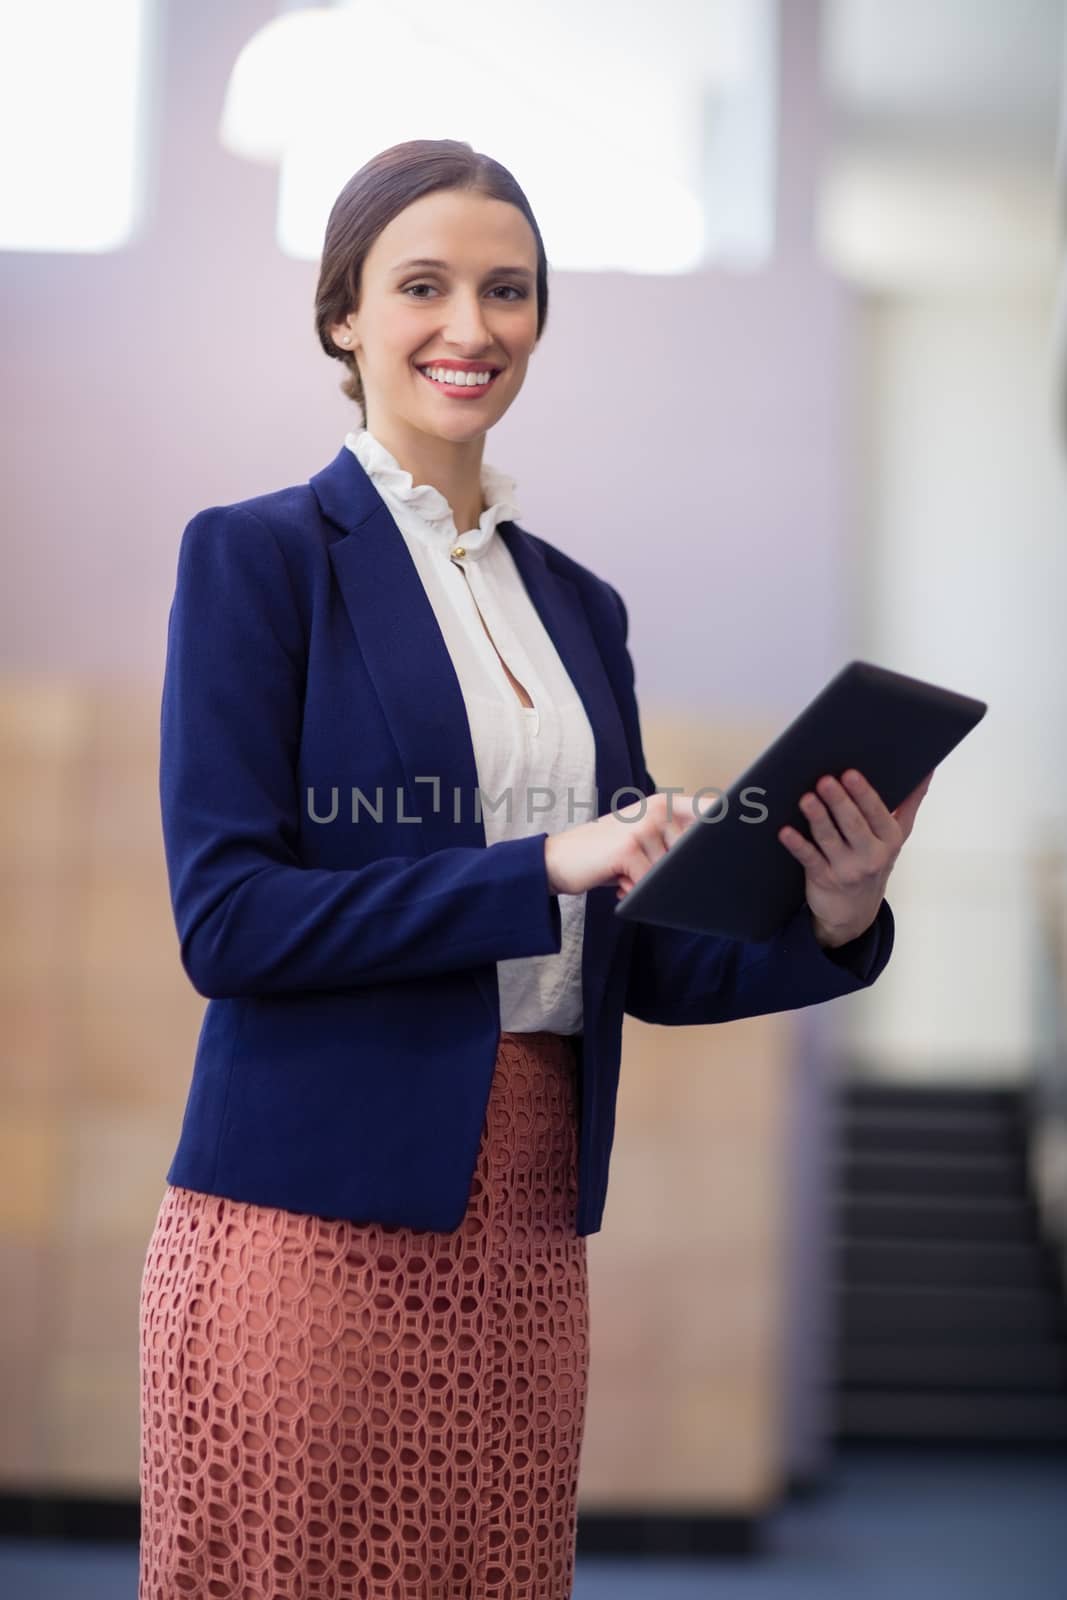 Businesswoman holding digital tablet by Wavebreakmedia